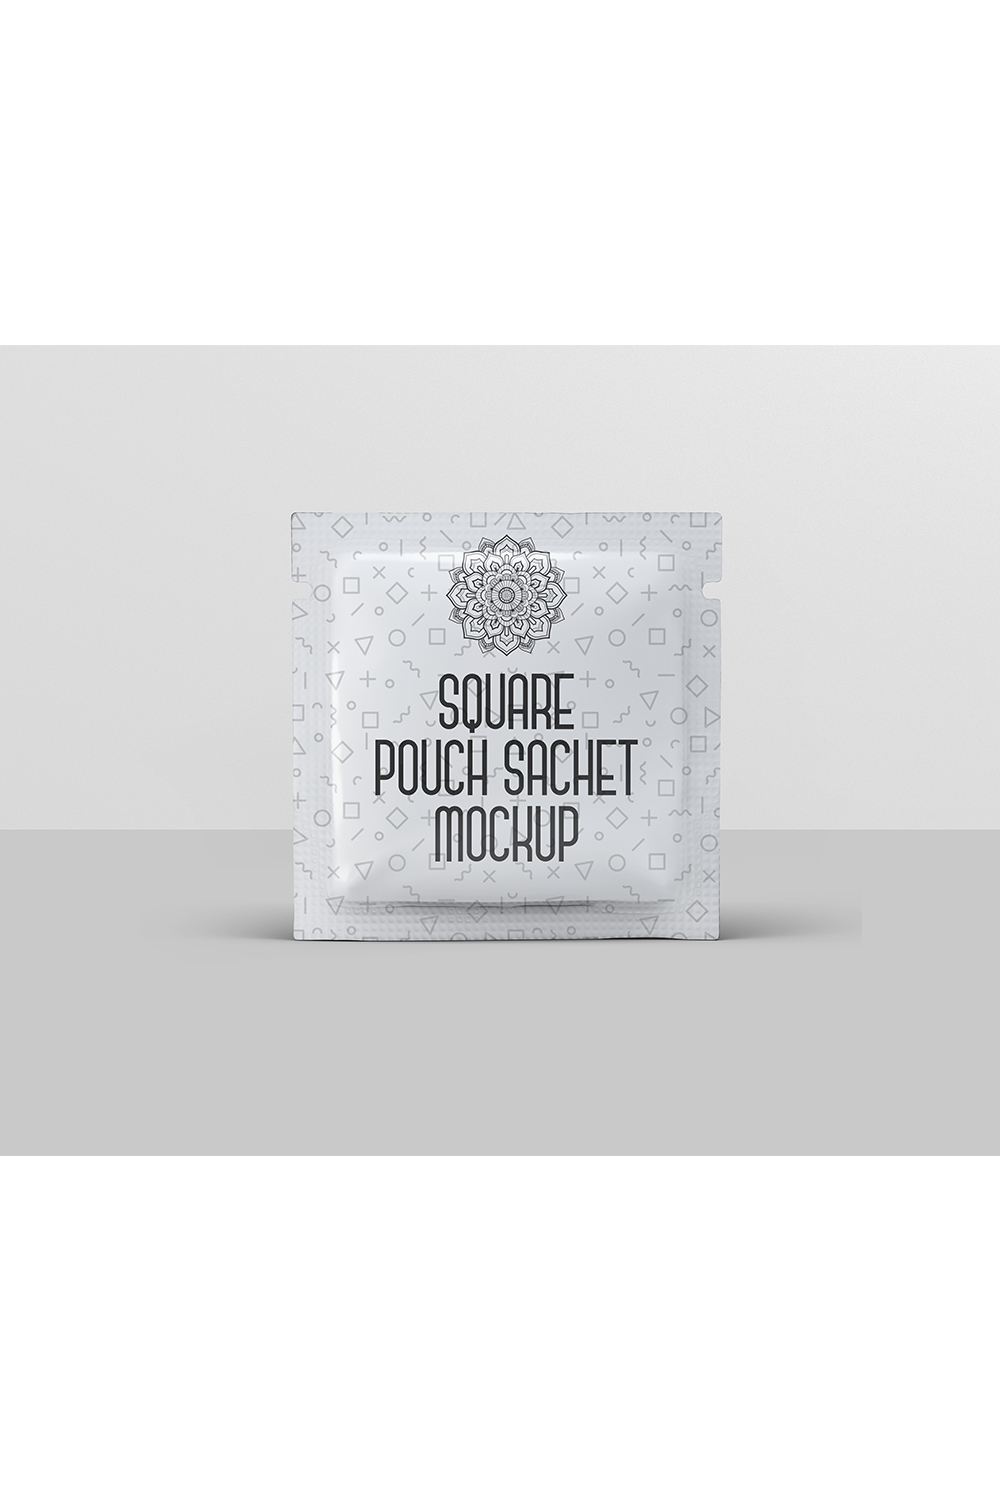 Square Pouch Sachet Mockup pinterest preview image.